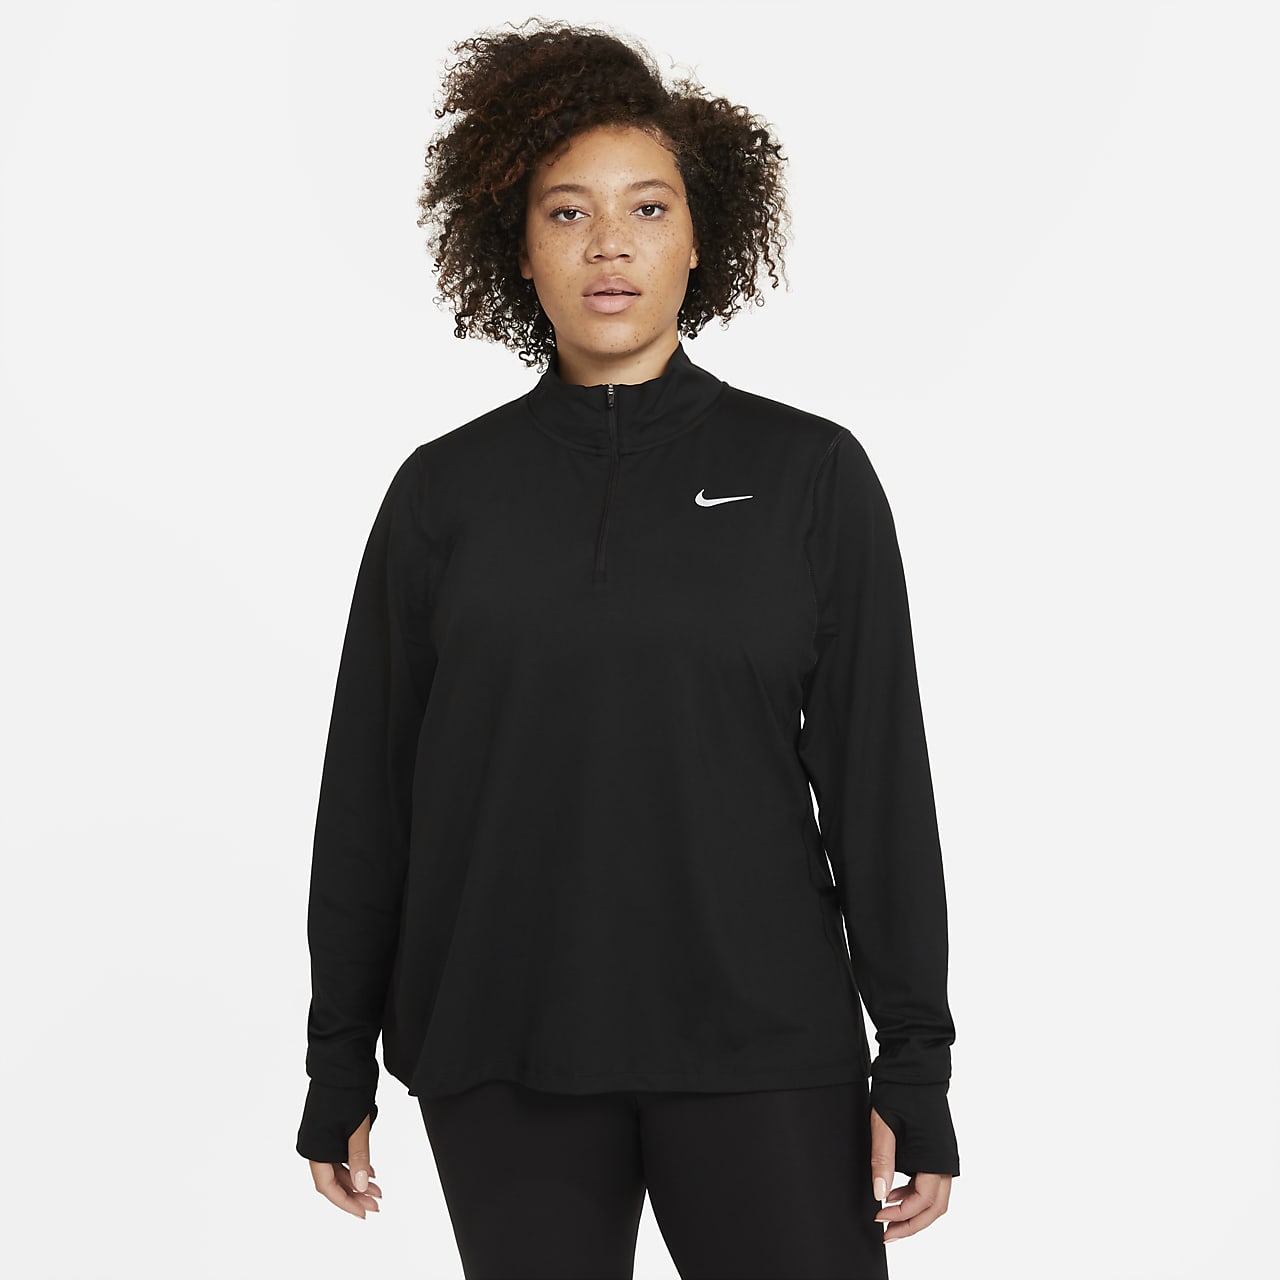 2-Zip Running Top (Plus Size). Nike NZ